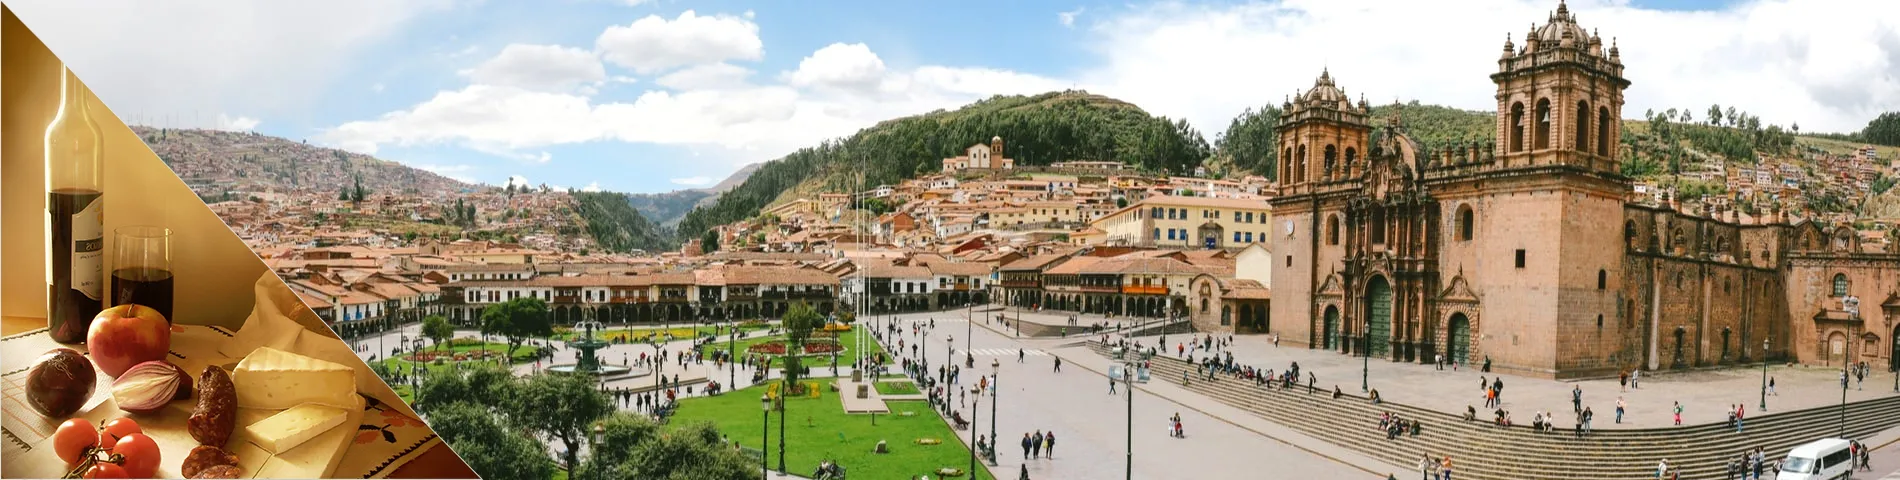 Cuzco - Espanyol i Cultura